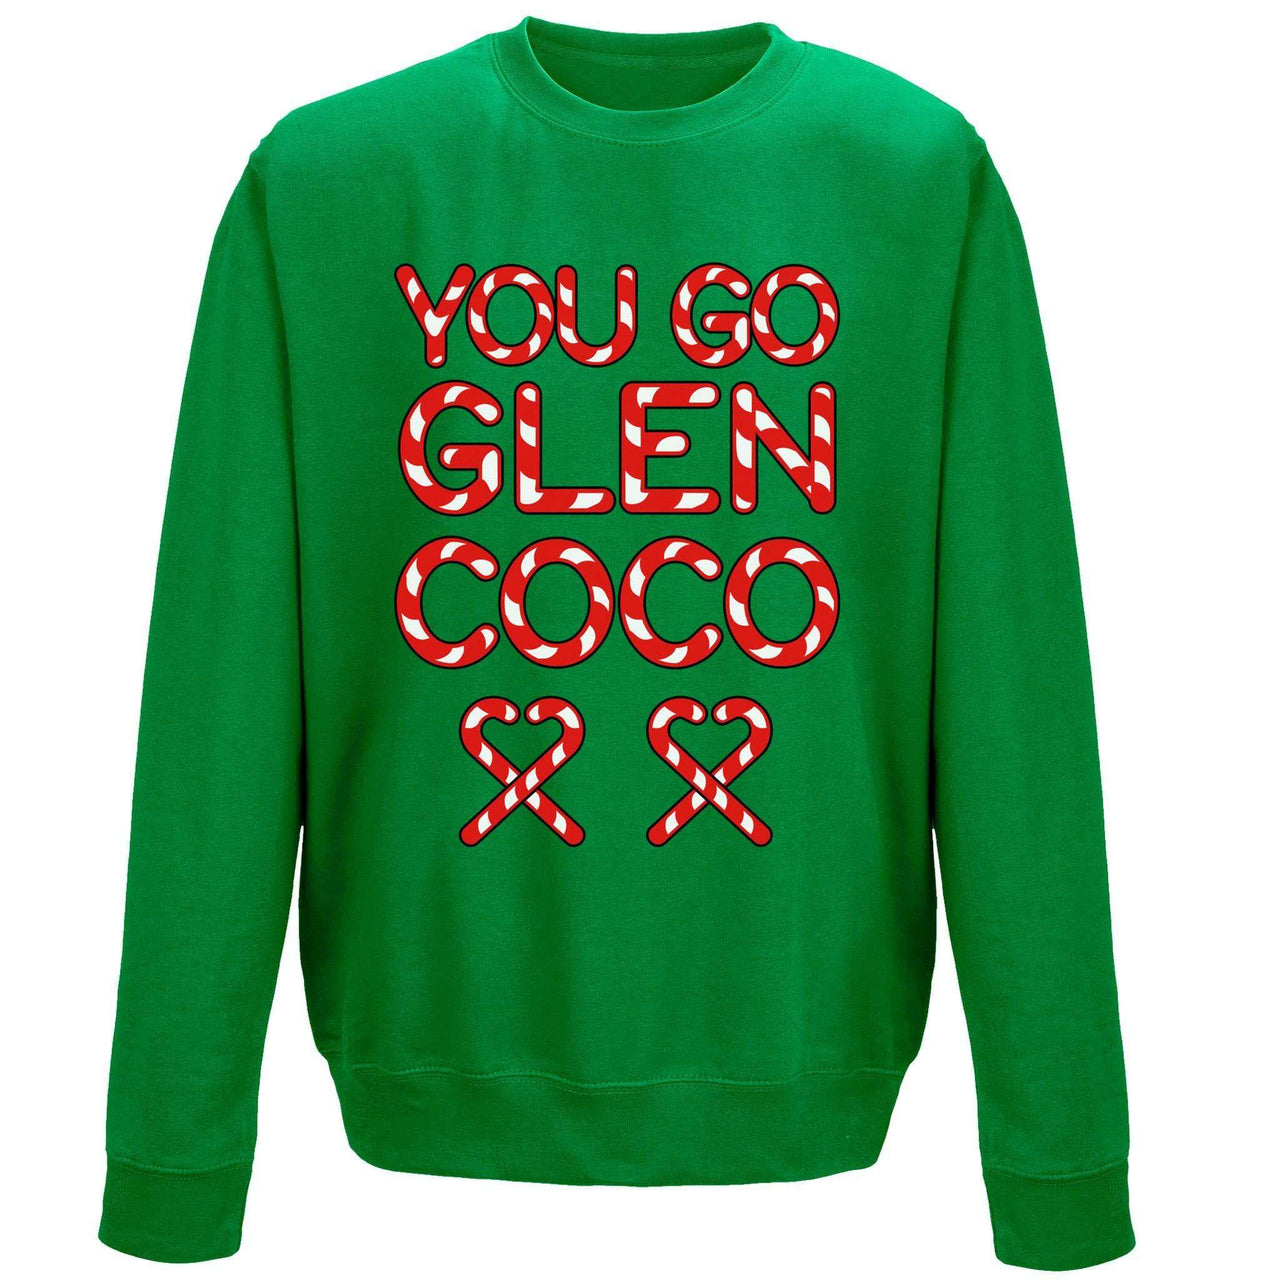 You Go Glen Coco Sweatshirt For Men and Women 8Ball